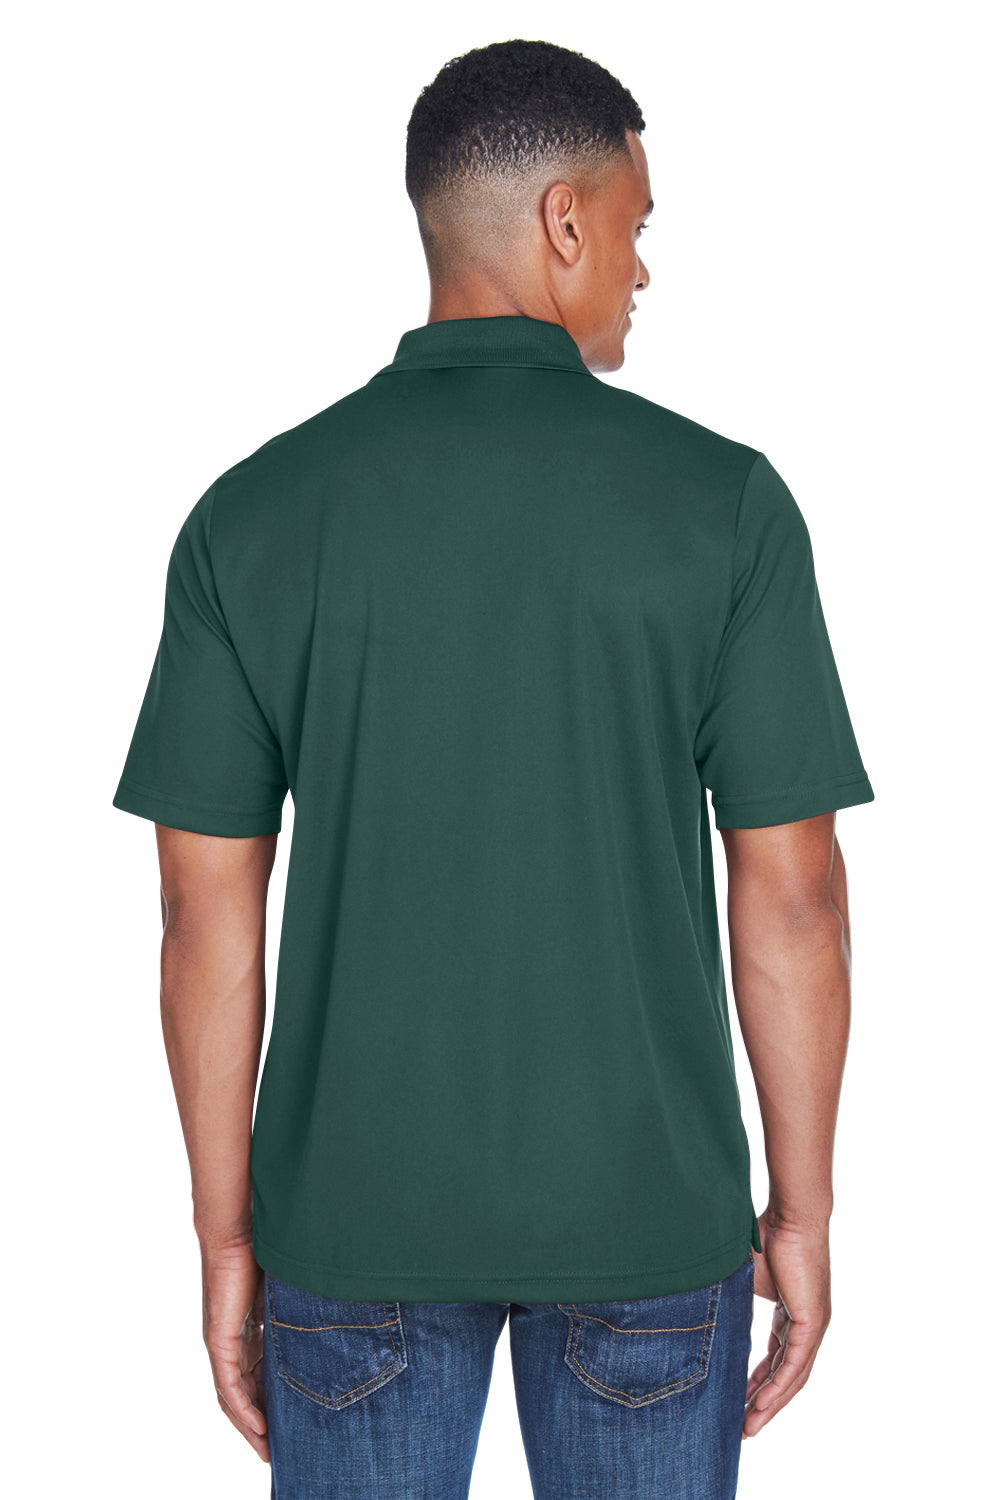 Core 365 88181P Mens Origin Performance Moisture Wicking Short Sleeve Polo Shirt w/ Pocket Forest Green Back